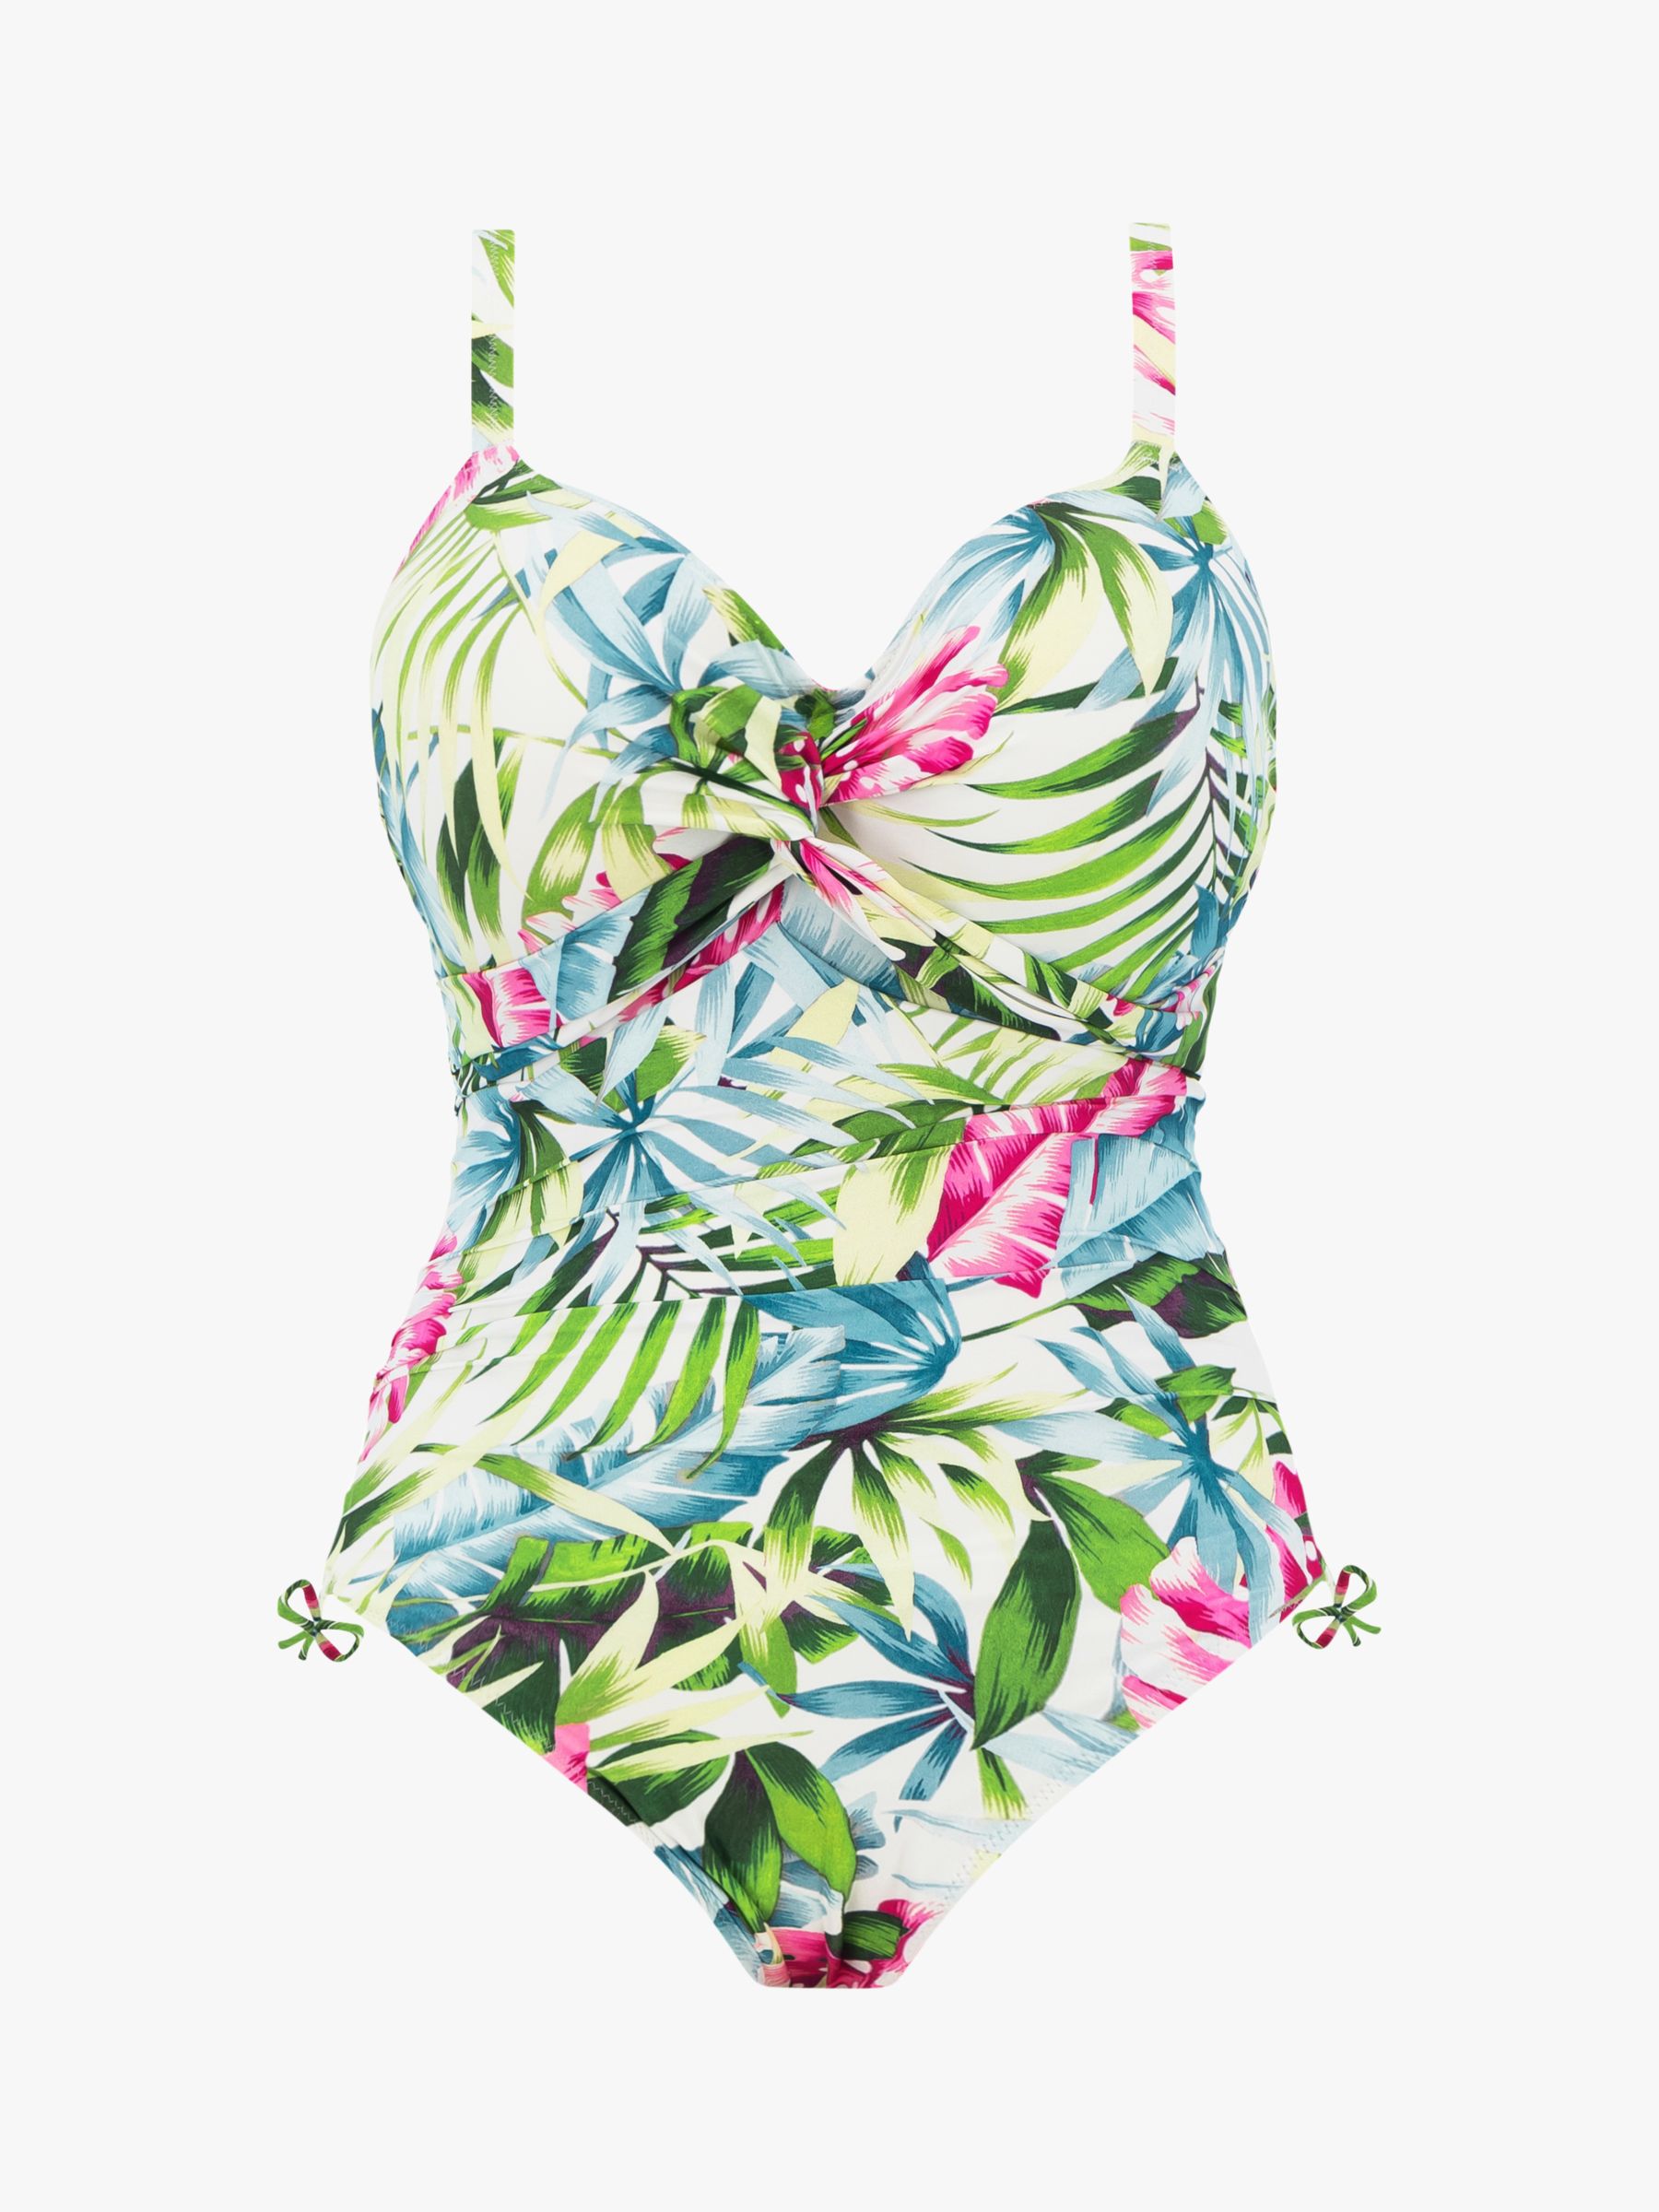 Fantasie Langkawi Palm Print Underwired Twist Front Swimsuit, White/Multi, 32DD